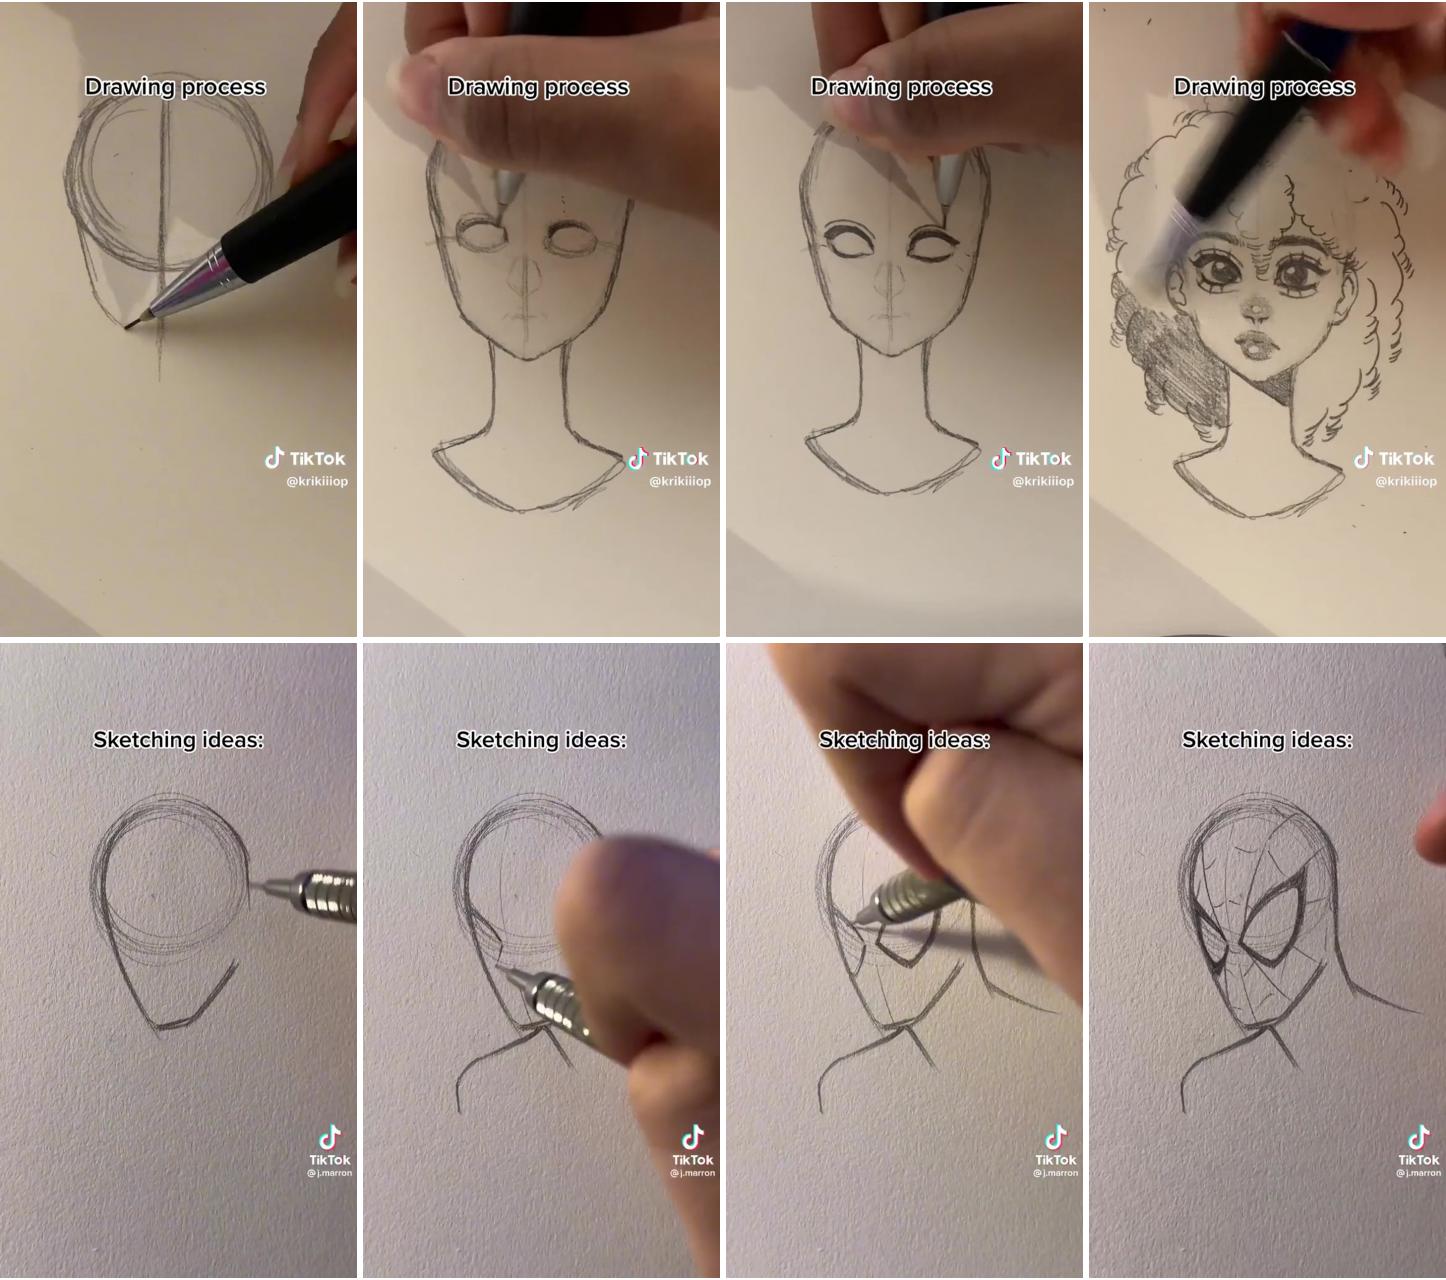 Cool sketch idea | easy doodles drawings